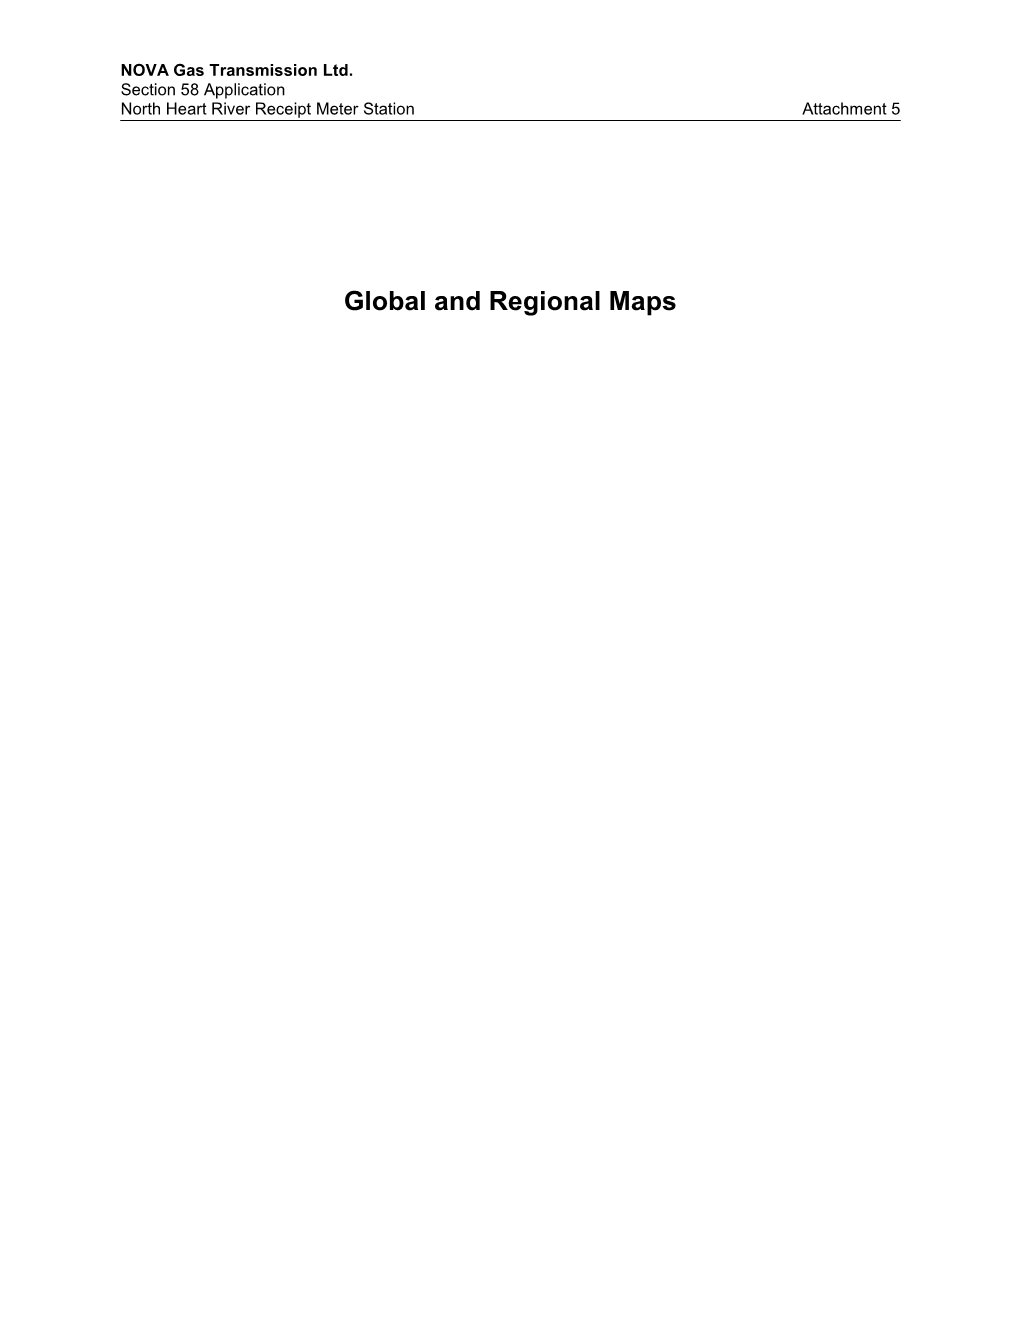 Global and Regional Maps NOVA Gas Transmission Ltd